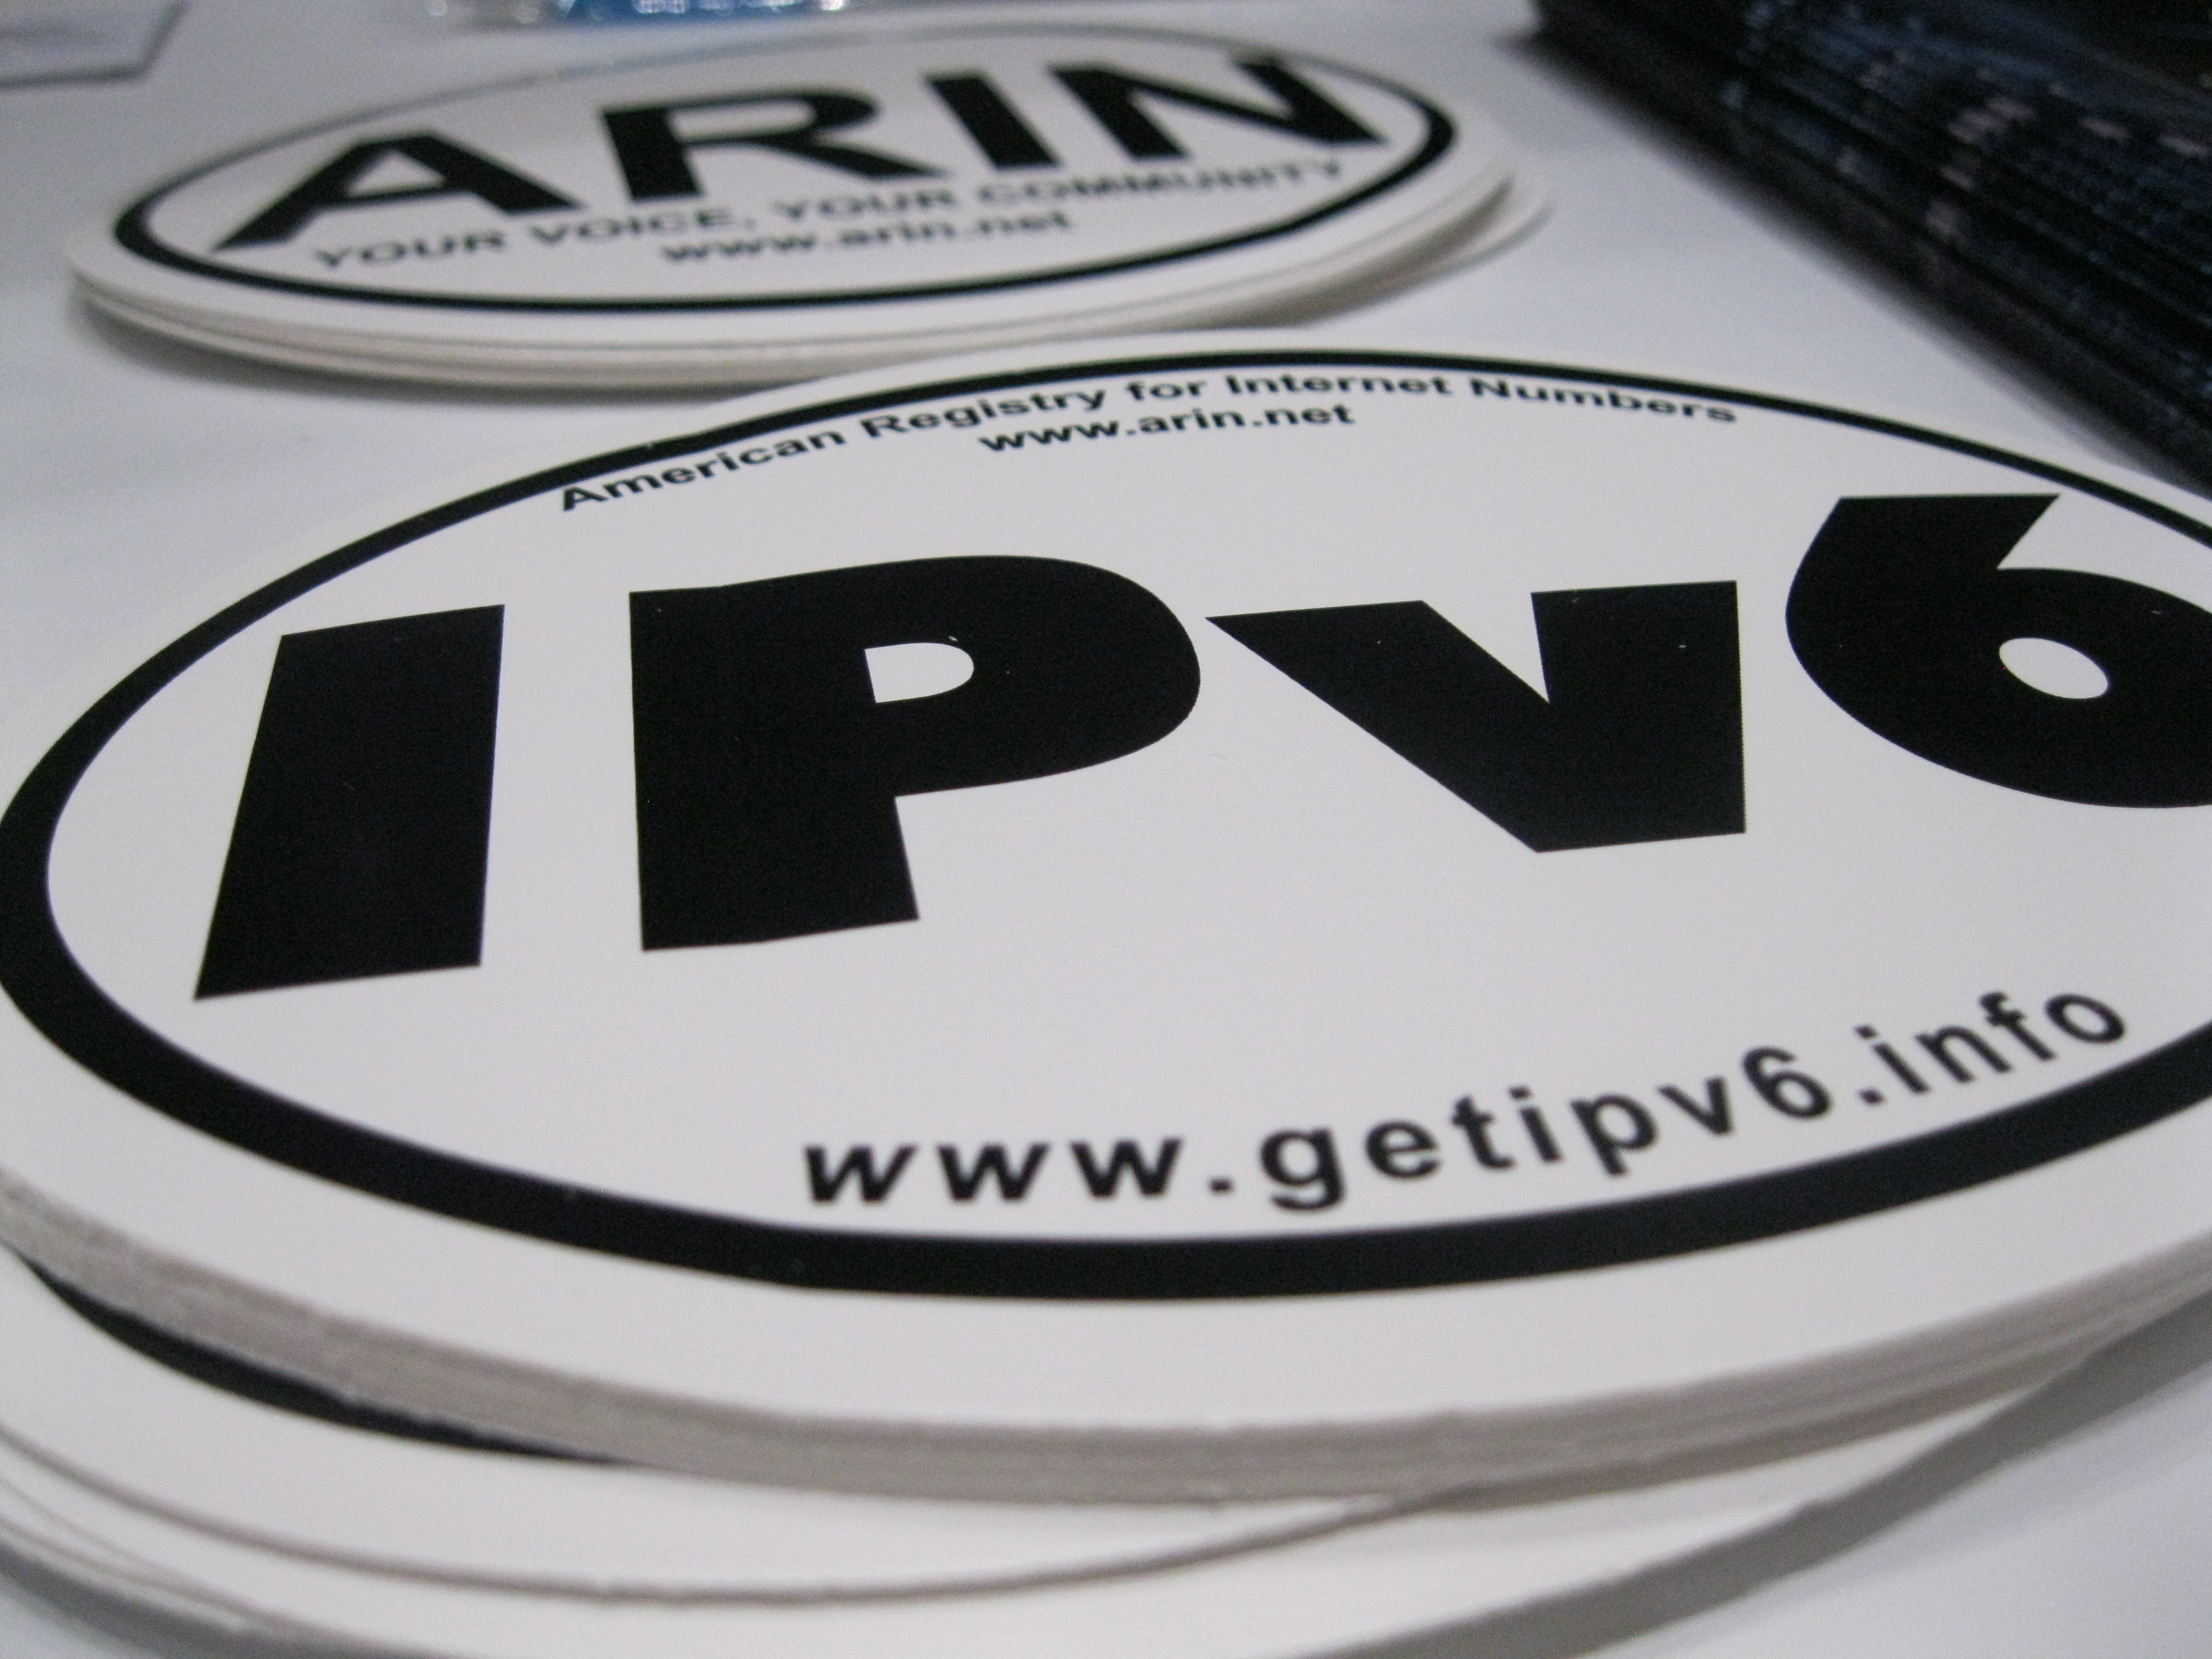 IPv6 in the News: A Recap of 2013 Headlines